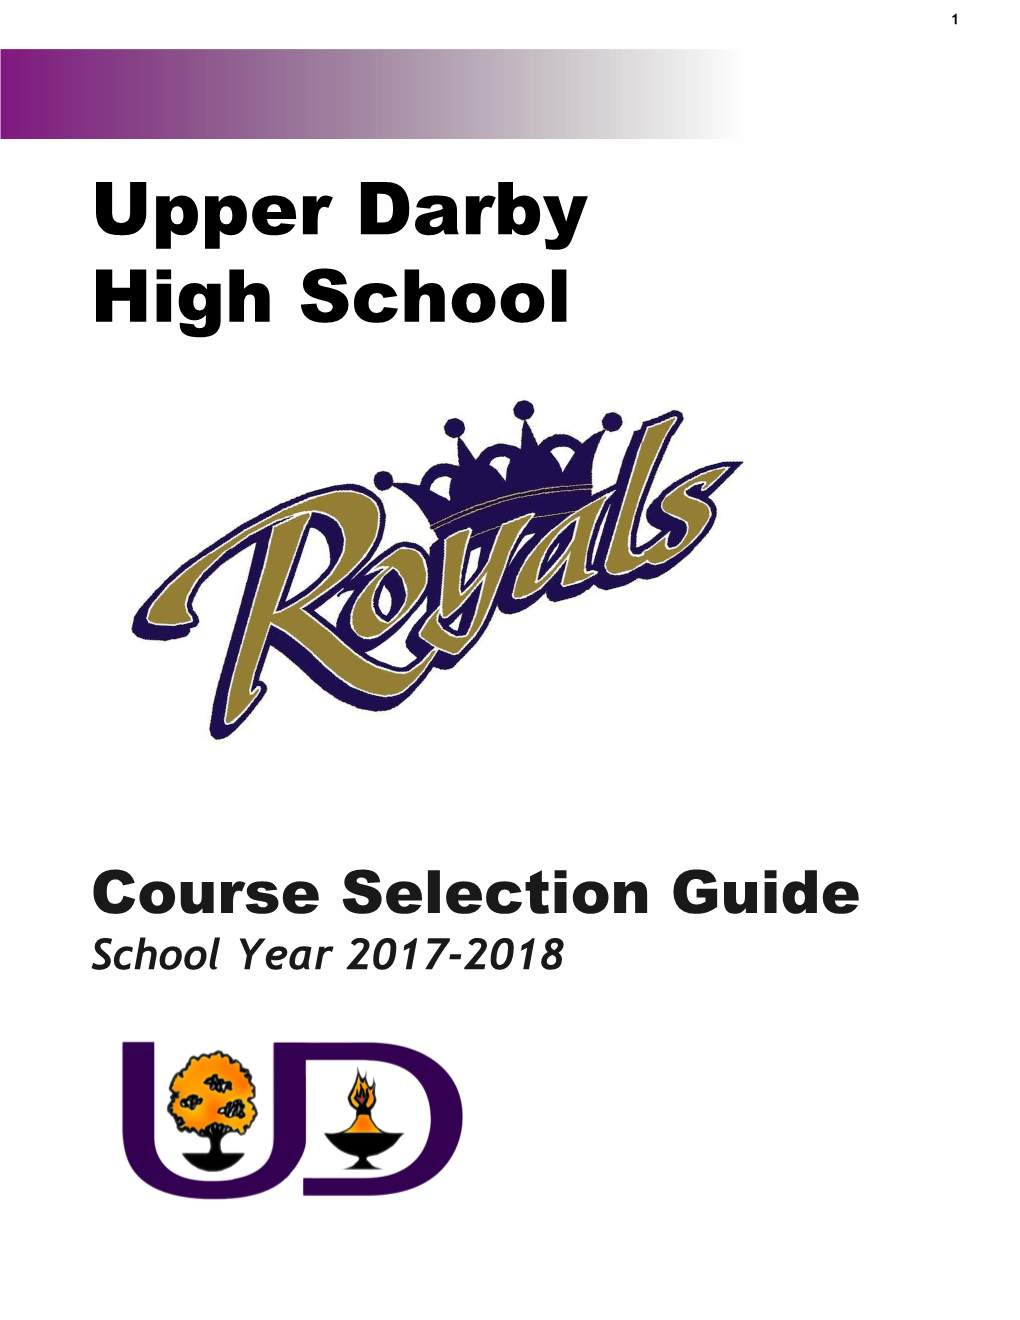 Upper Darby High School